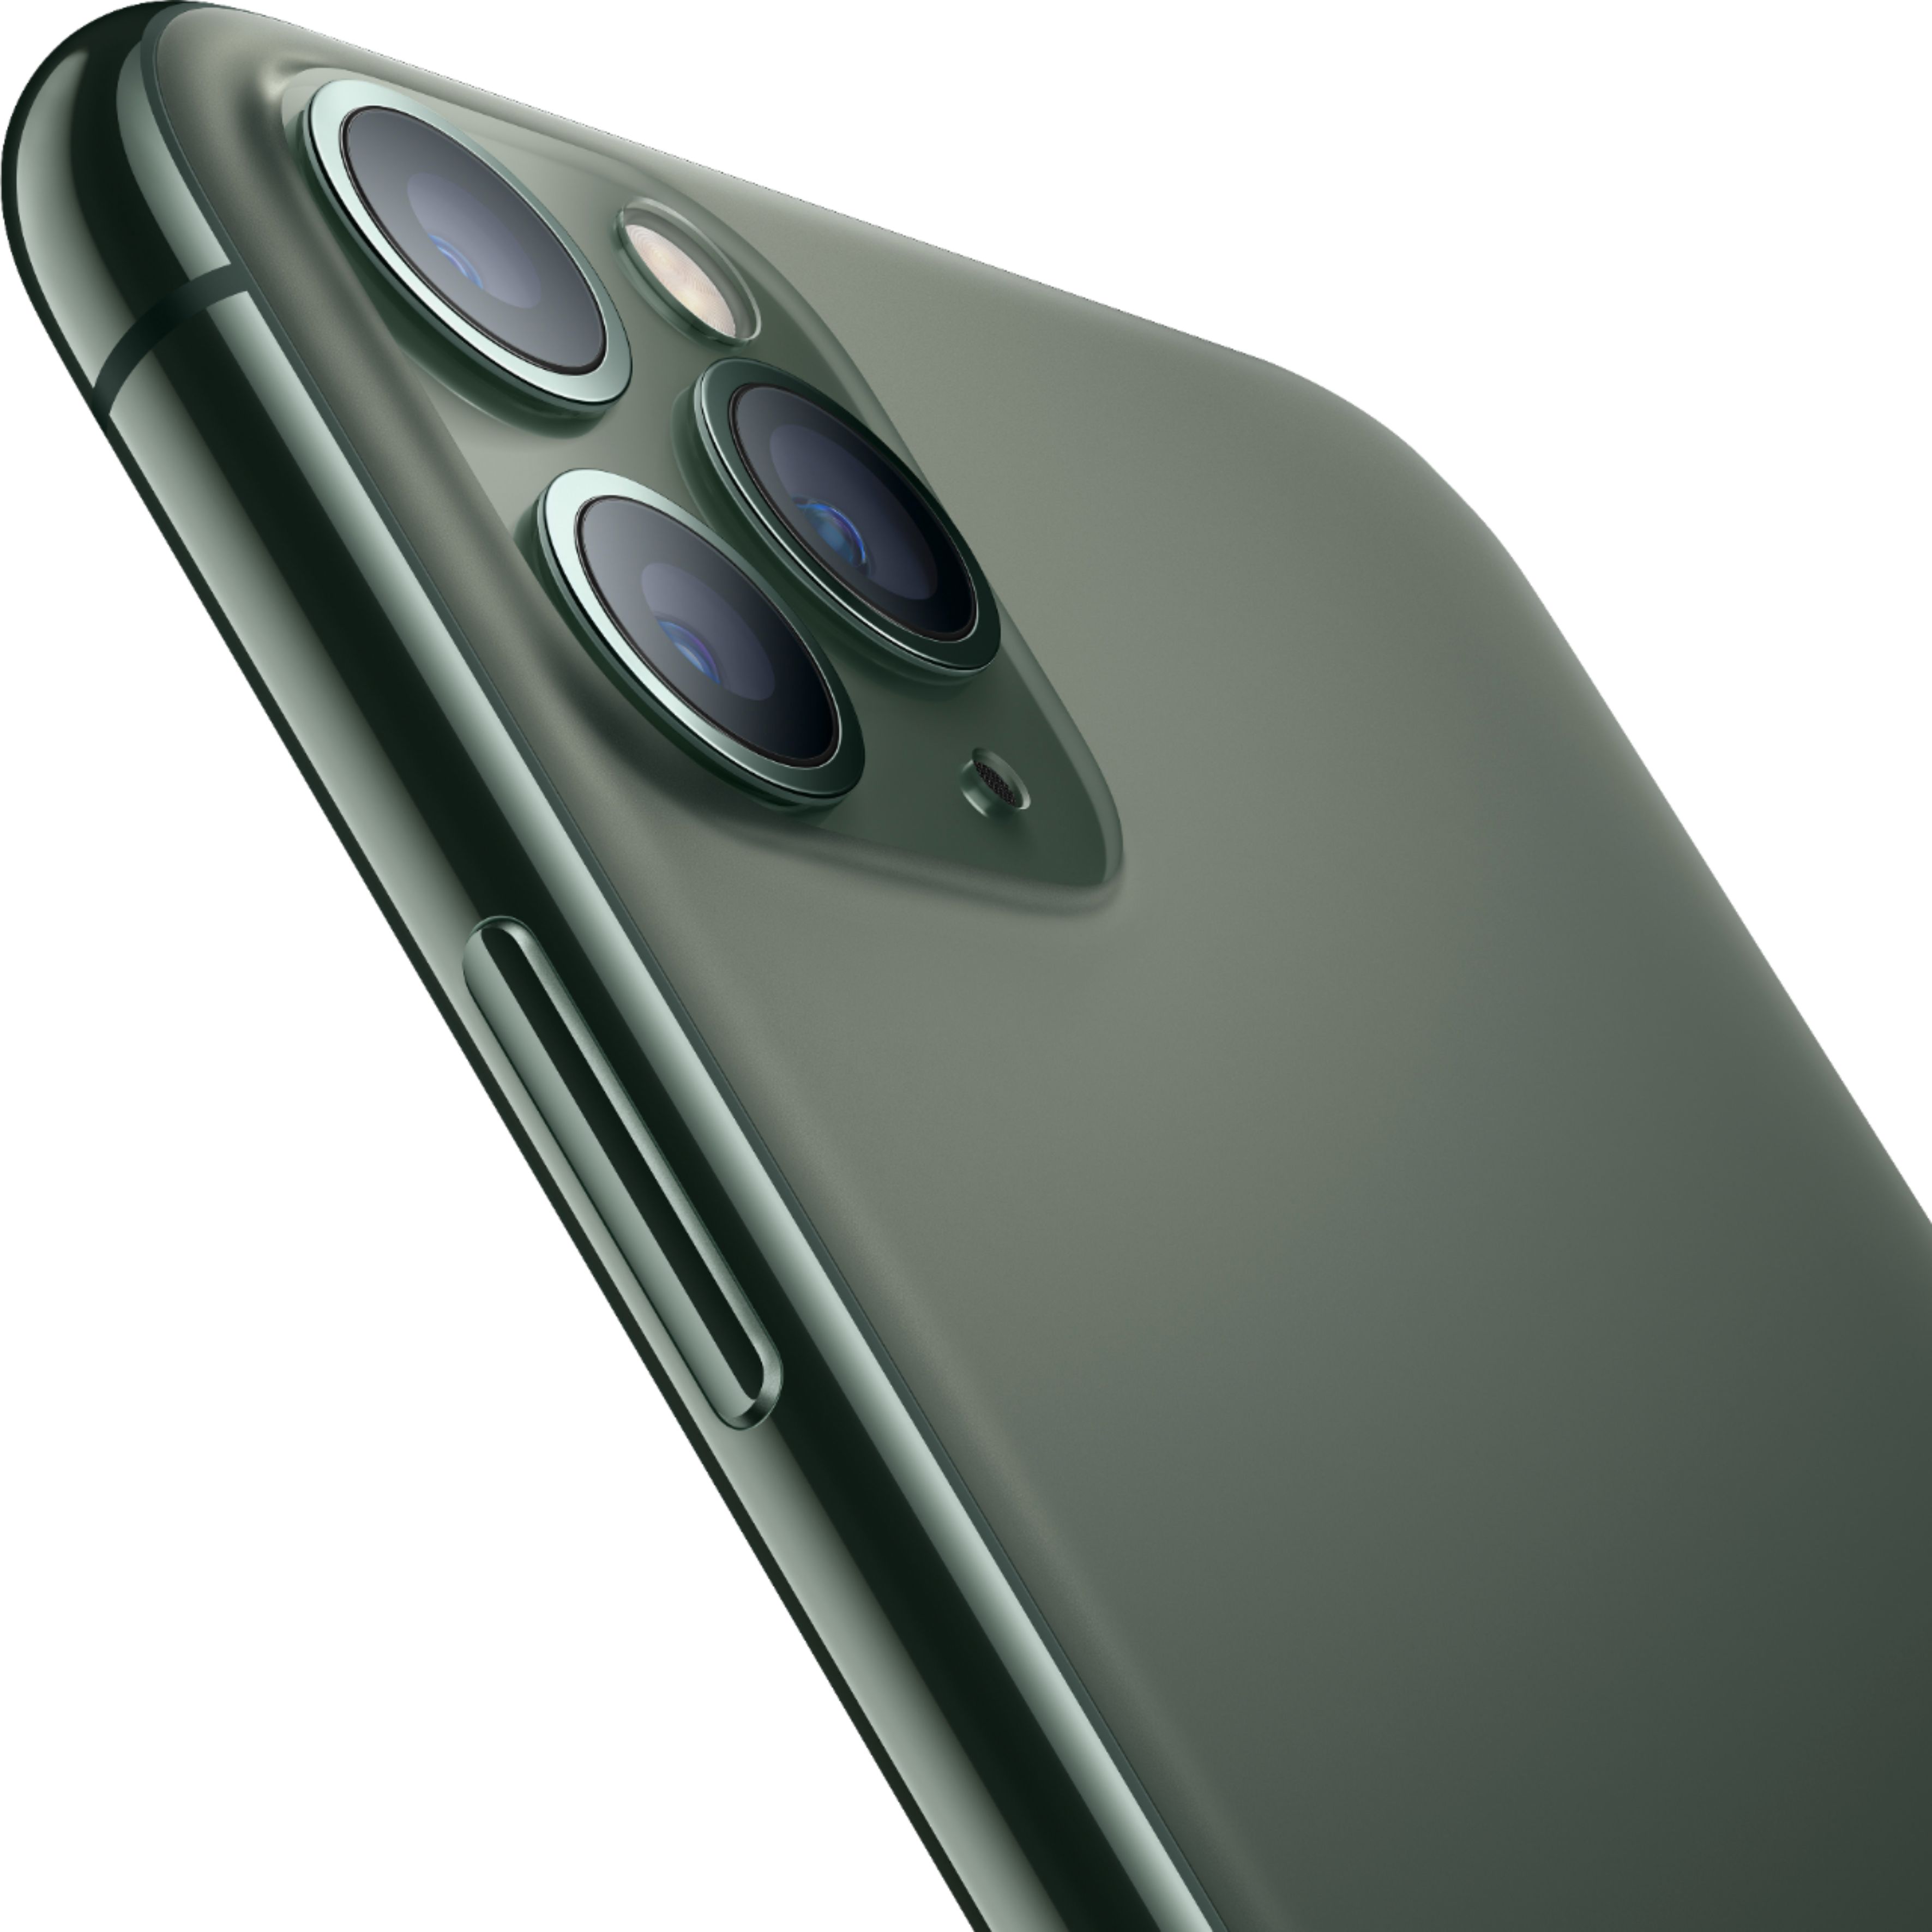 Apple iPhone 11 Pro Max 256GB Fully Unlocked (Verizon + Sprint + GSM Unlocked) - Midnight Green&nbsp;(Used- B Grade) - image 2 of 4